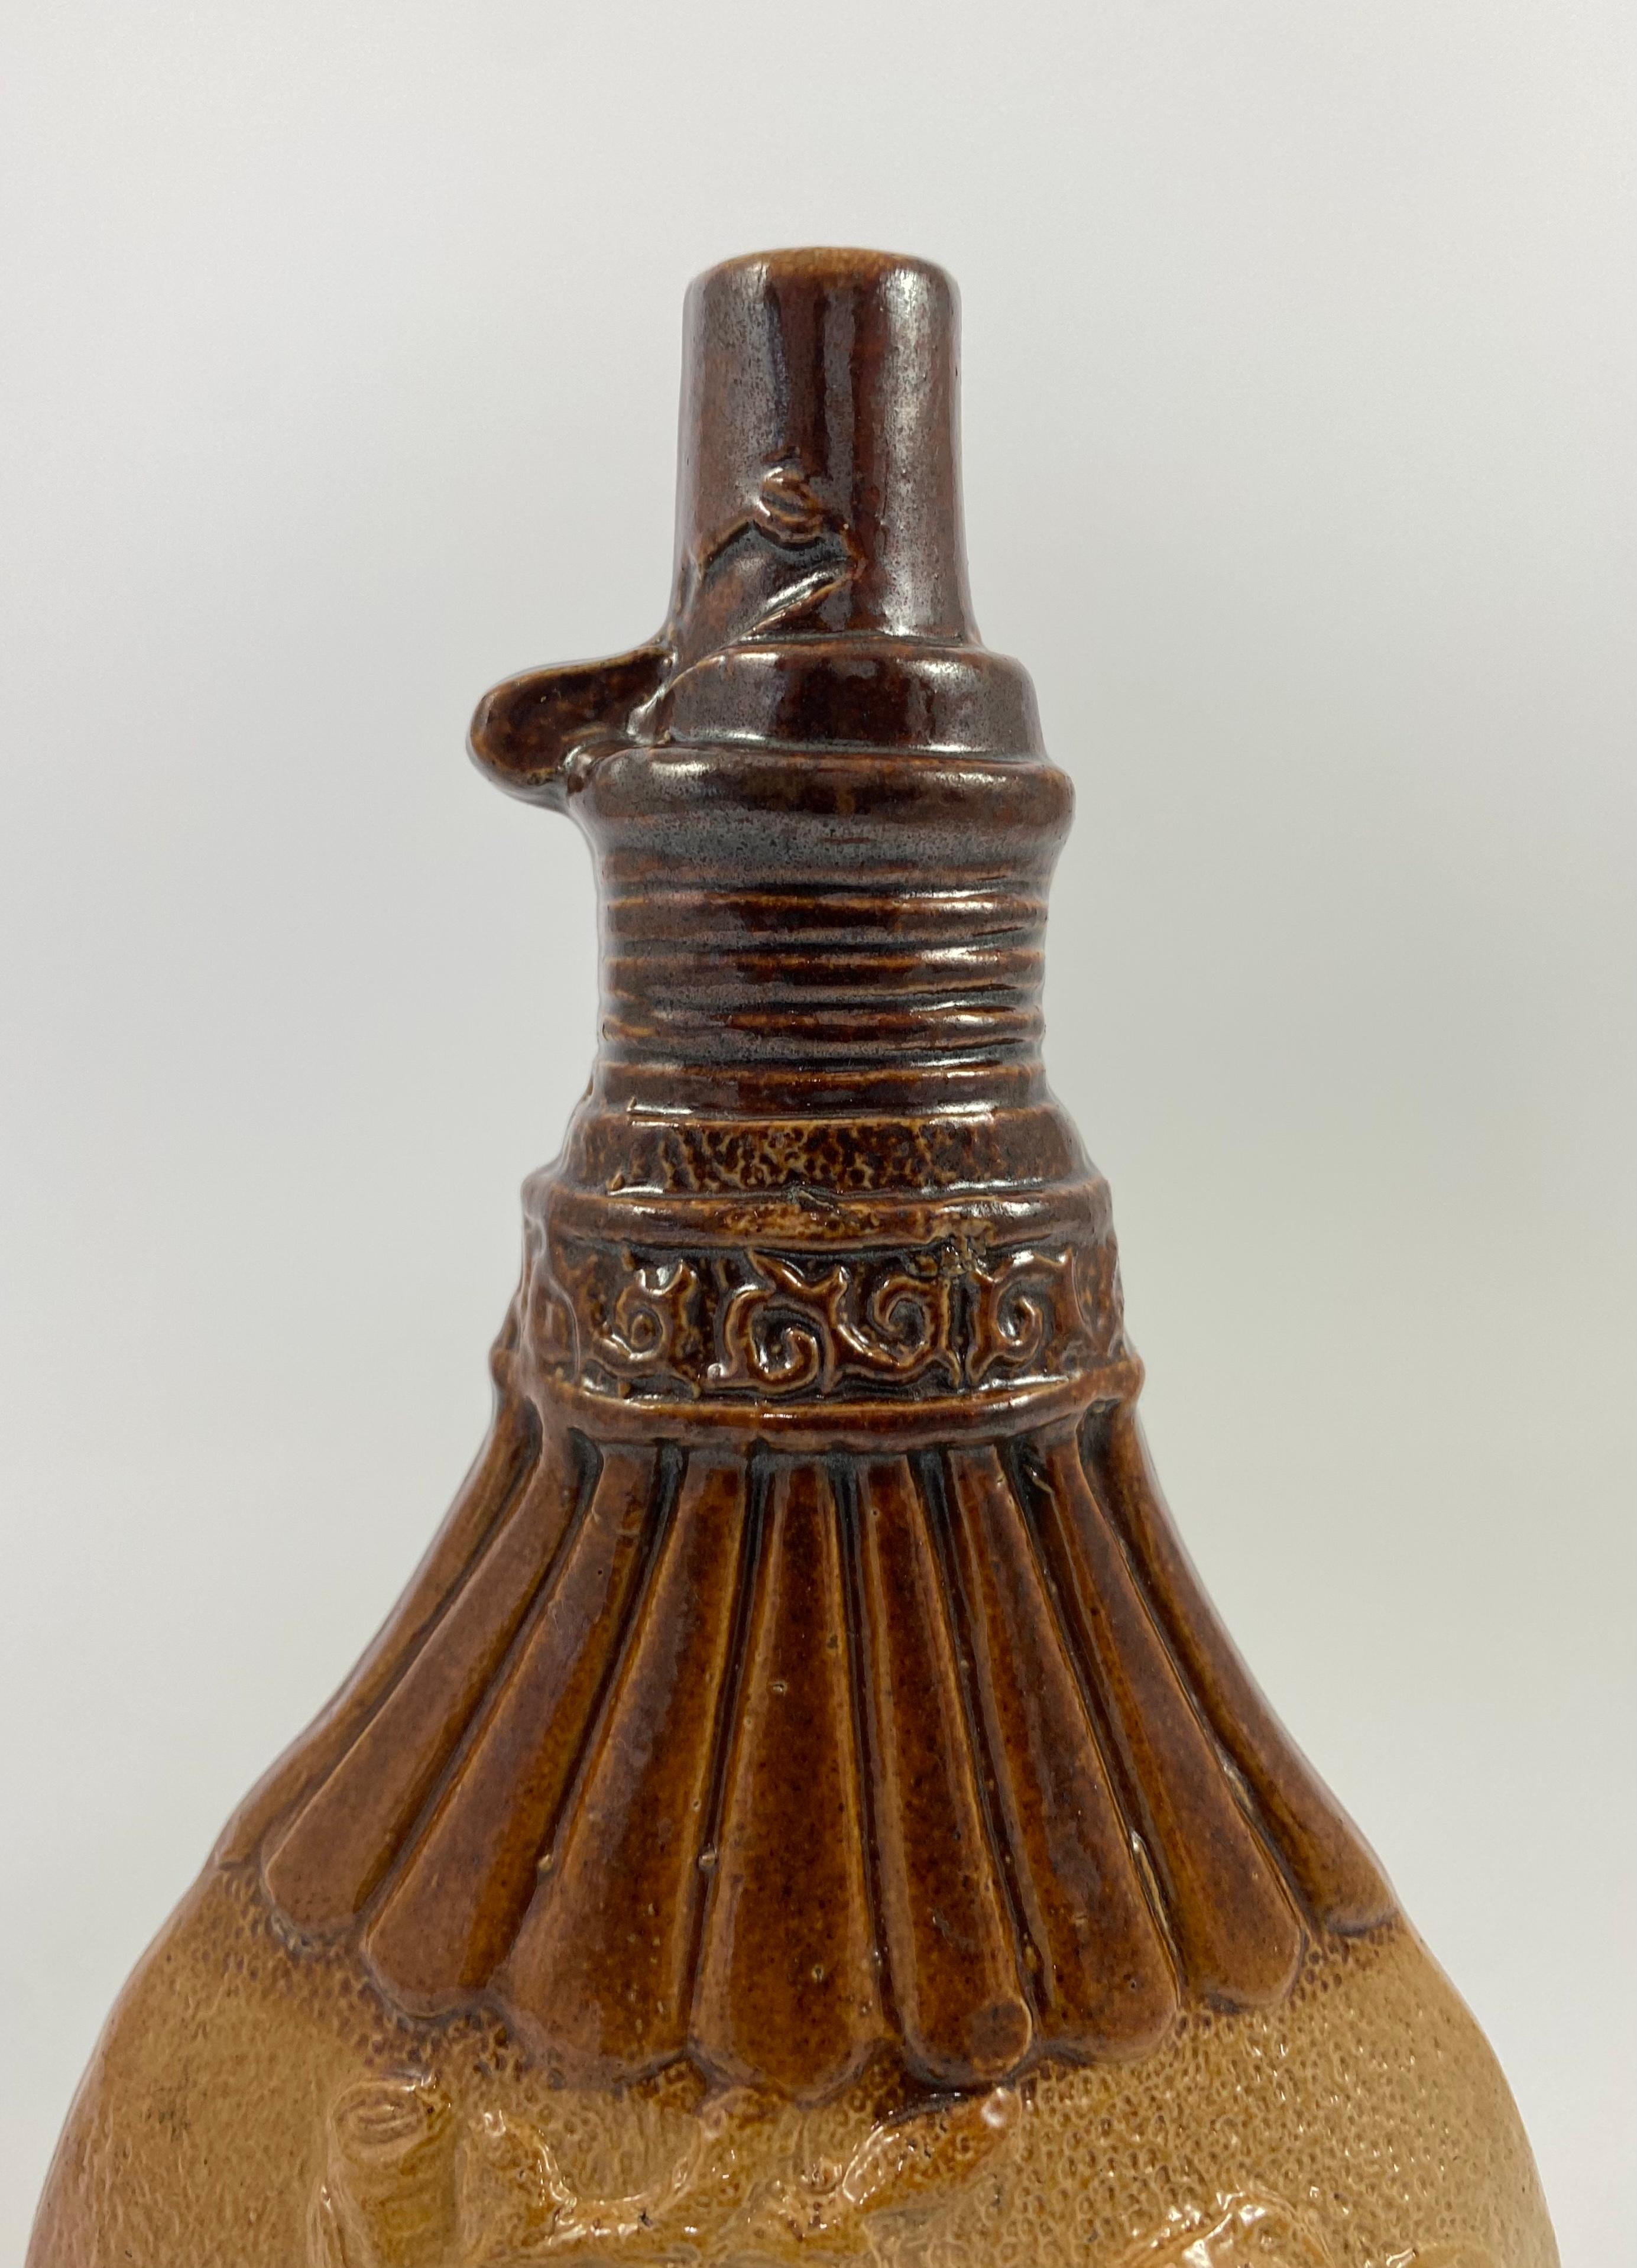 Fired Lambeth Saltglaze Spirit Flask, c. 1840